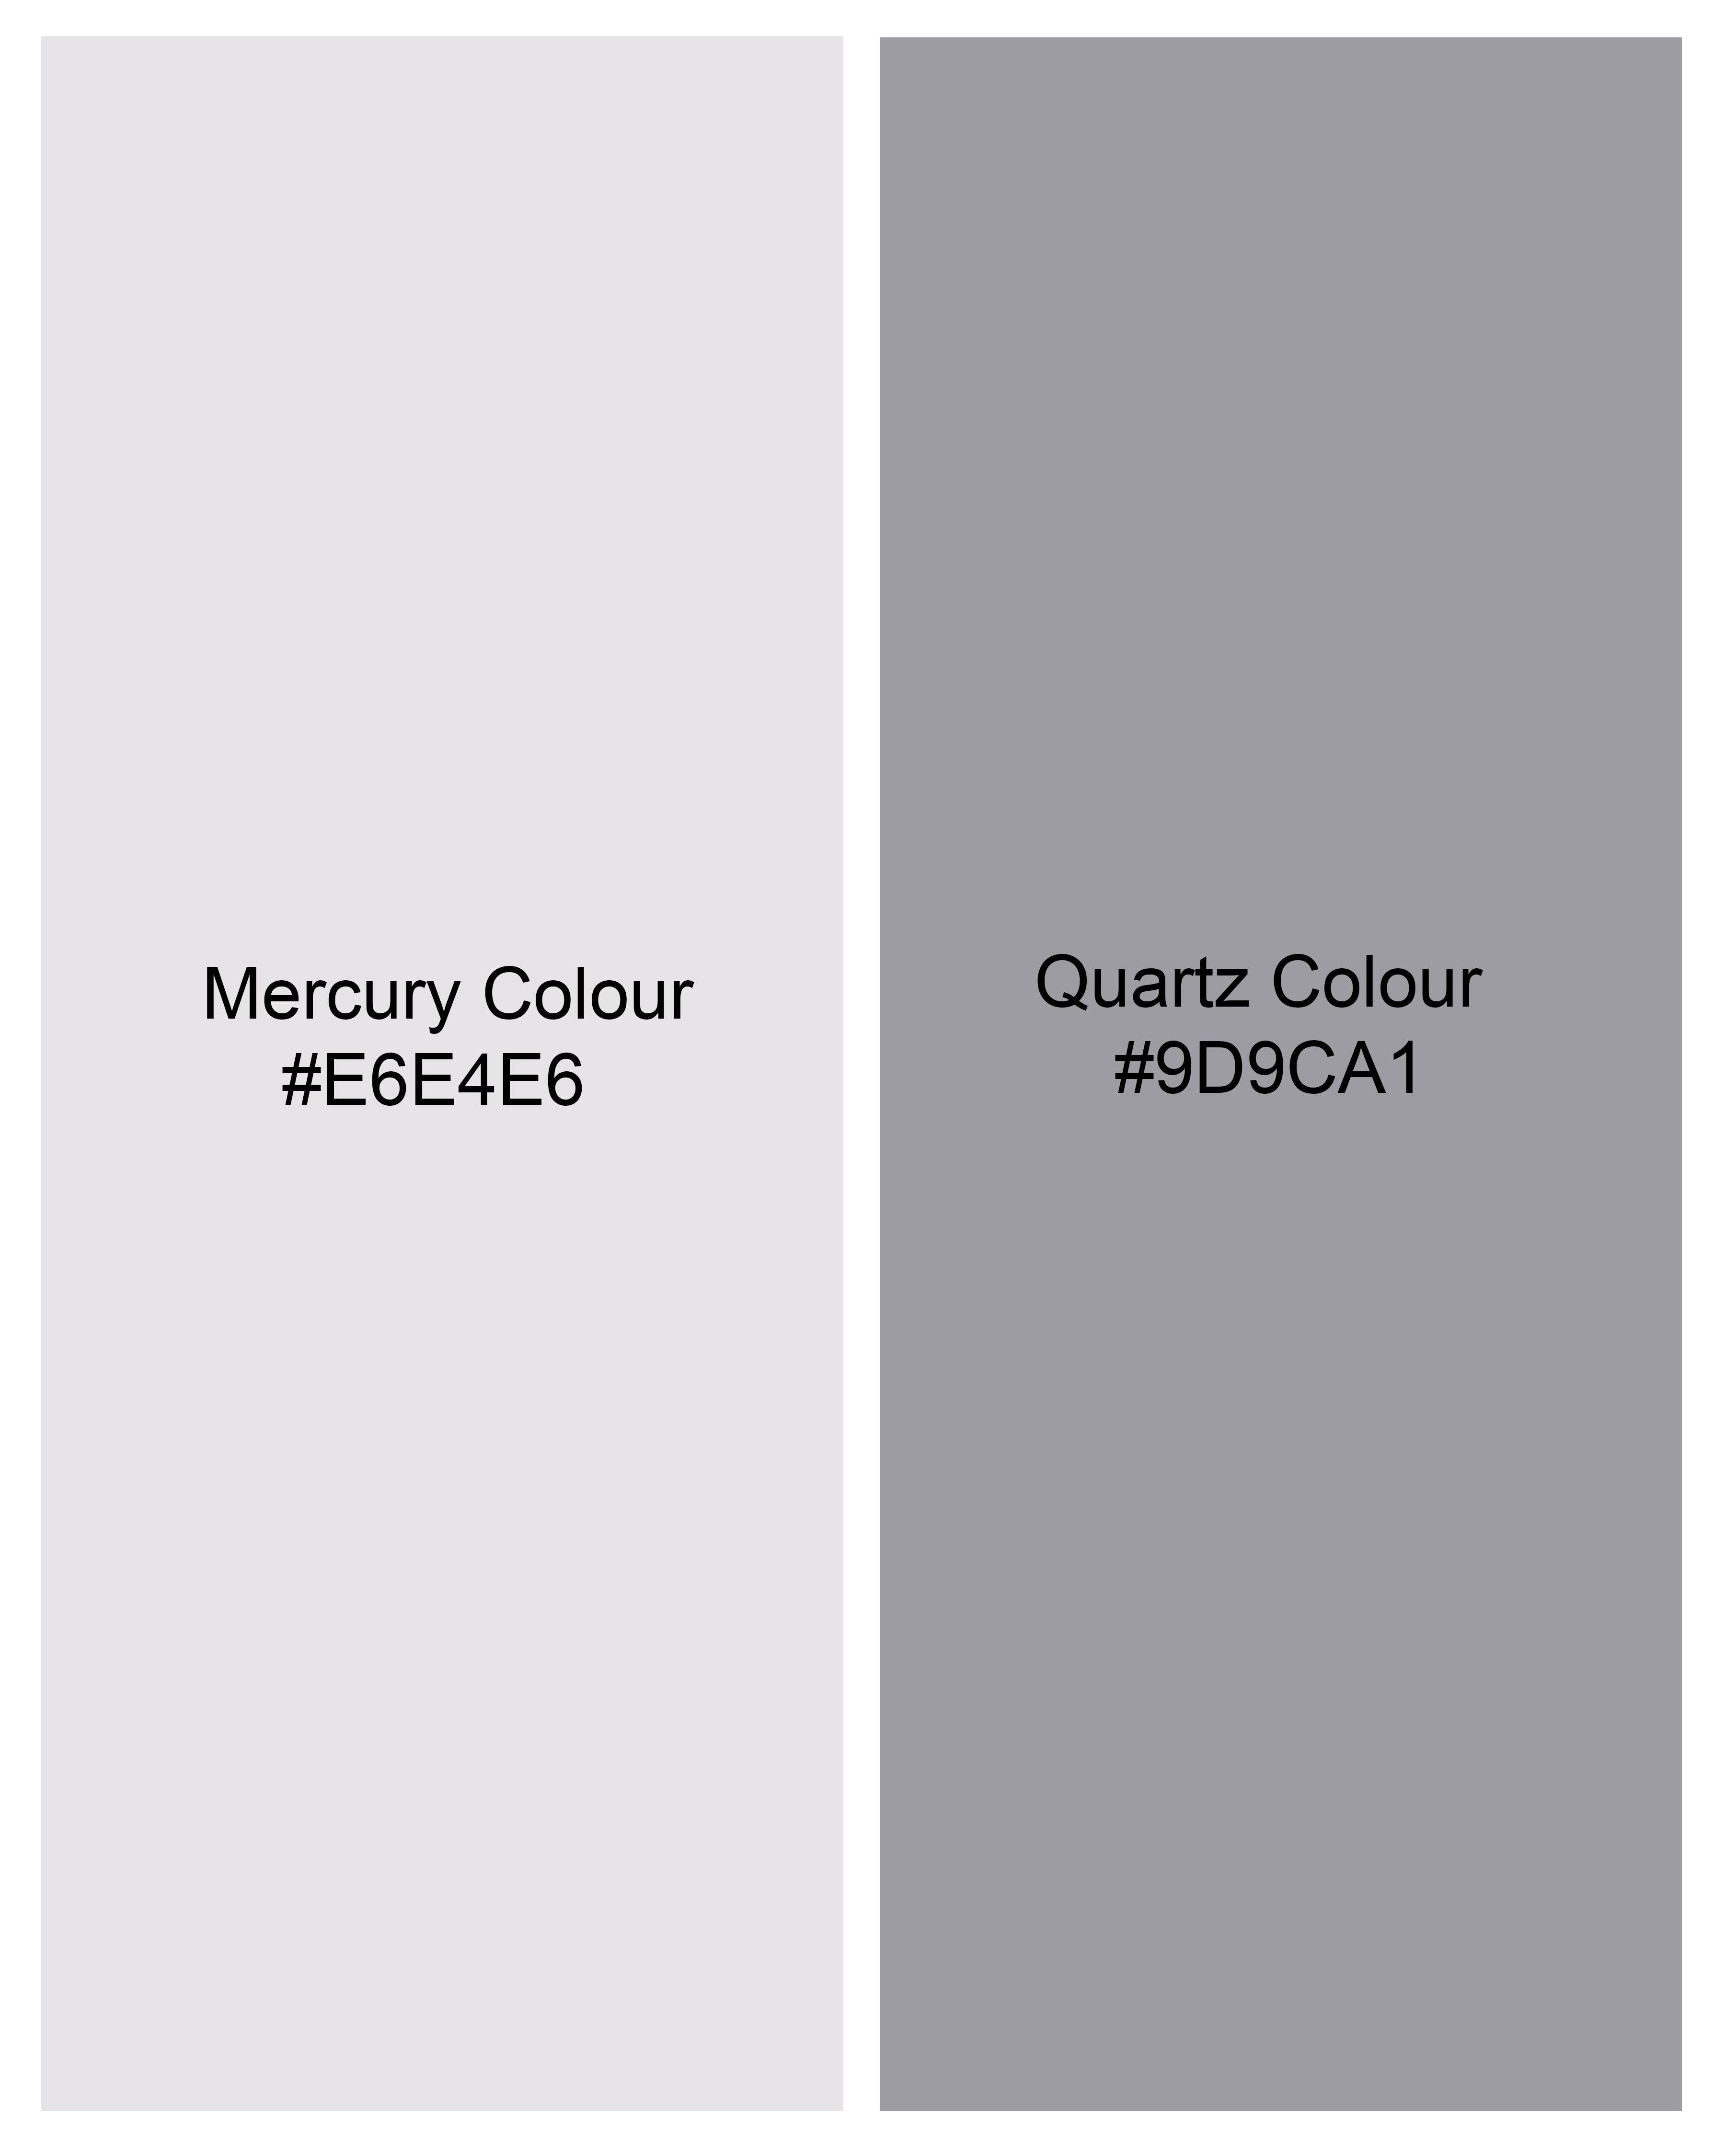 Mercury with Quartz Gray Box Like Printed Super Soft Premium Cotton Shirt 9569-CA-38, 9569-CA-H-38, 9569-CA-39, 9569-CA-H-39, 9569-CA-40, 9569-CA-H-40, 9569-CA-42, 9569-CA-H-42, 9569-CA-44, 9569-CA-H-44, 9569-CA-46, 9569-CA-H-46, 9569-CA-48, 9569-CA-H-48, 9569-CA-50, 9569-CA-H-50, 9569-CA-52, 9569-CA-H-52